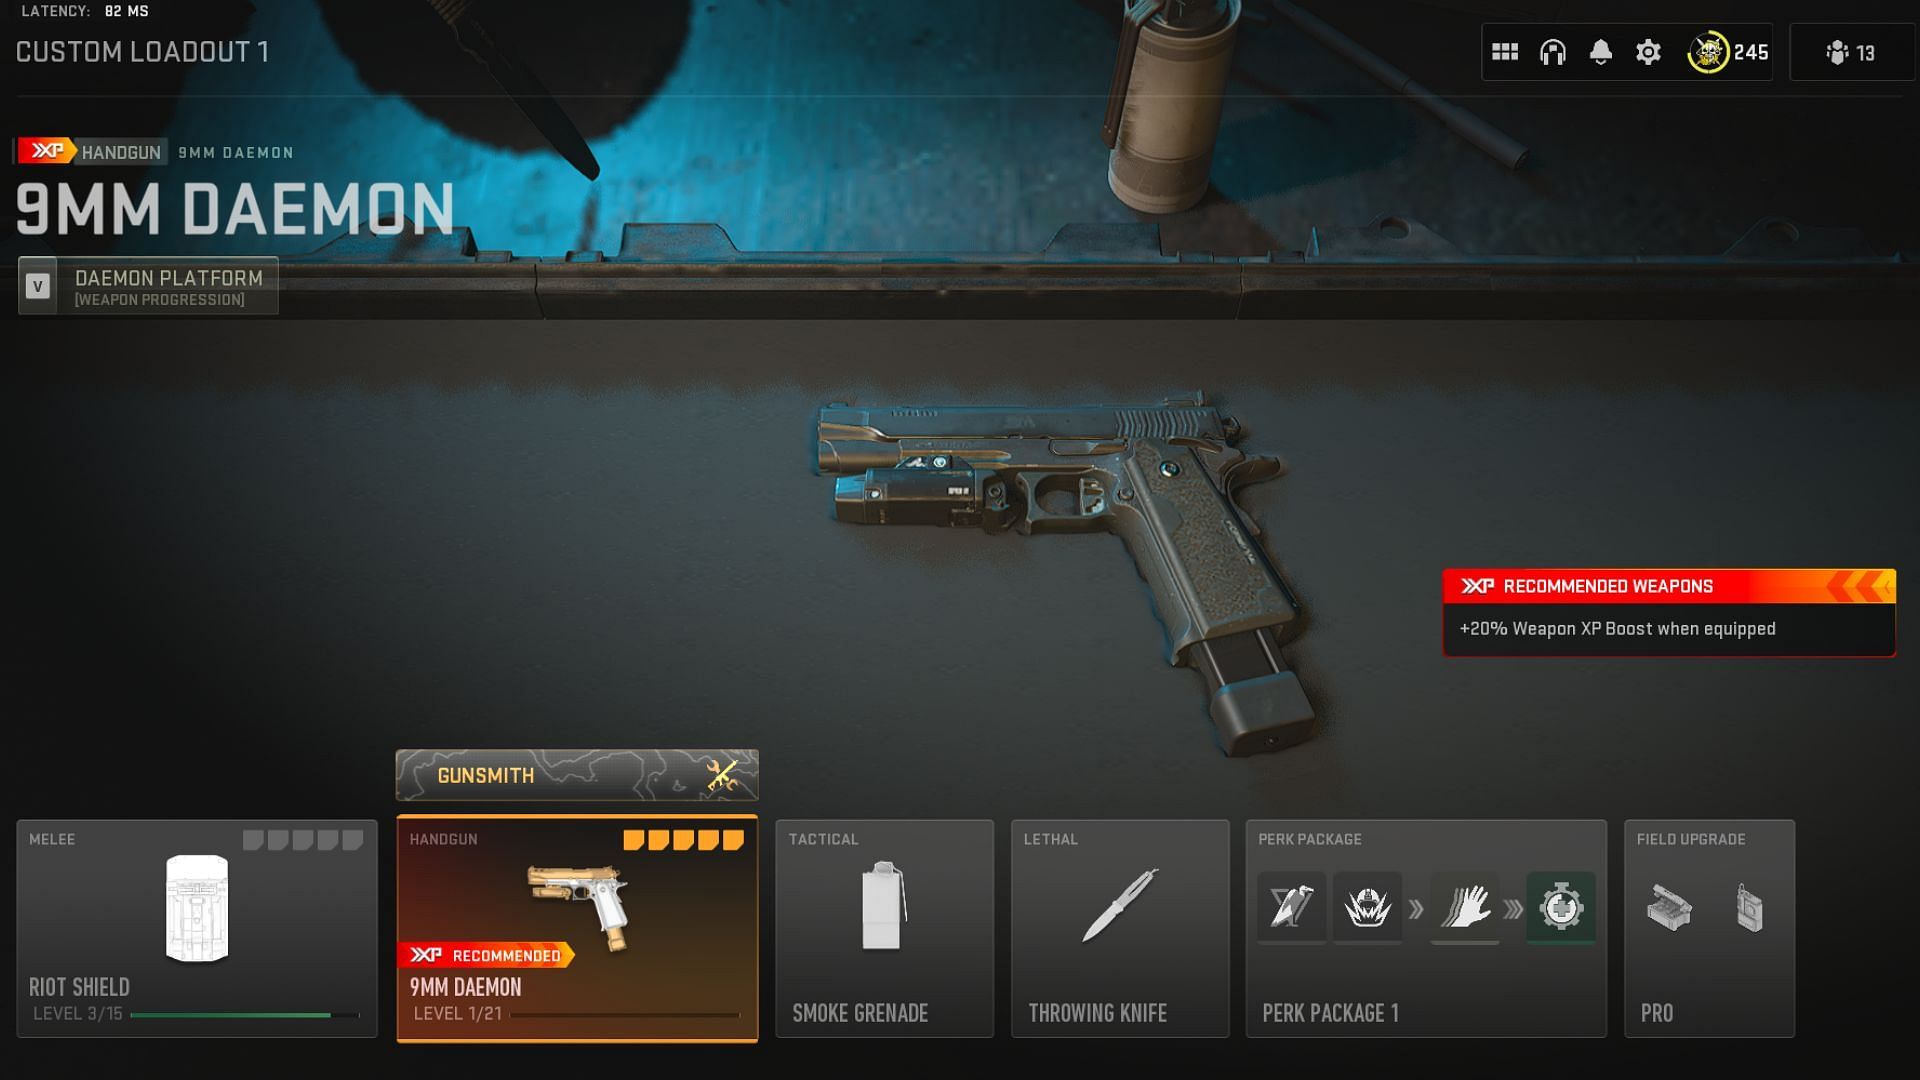 9mm Daemon class setup (Image via Activision)